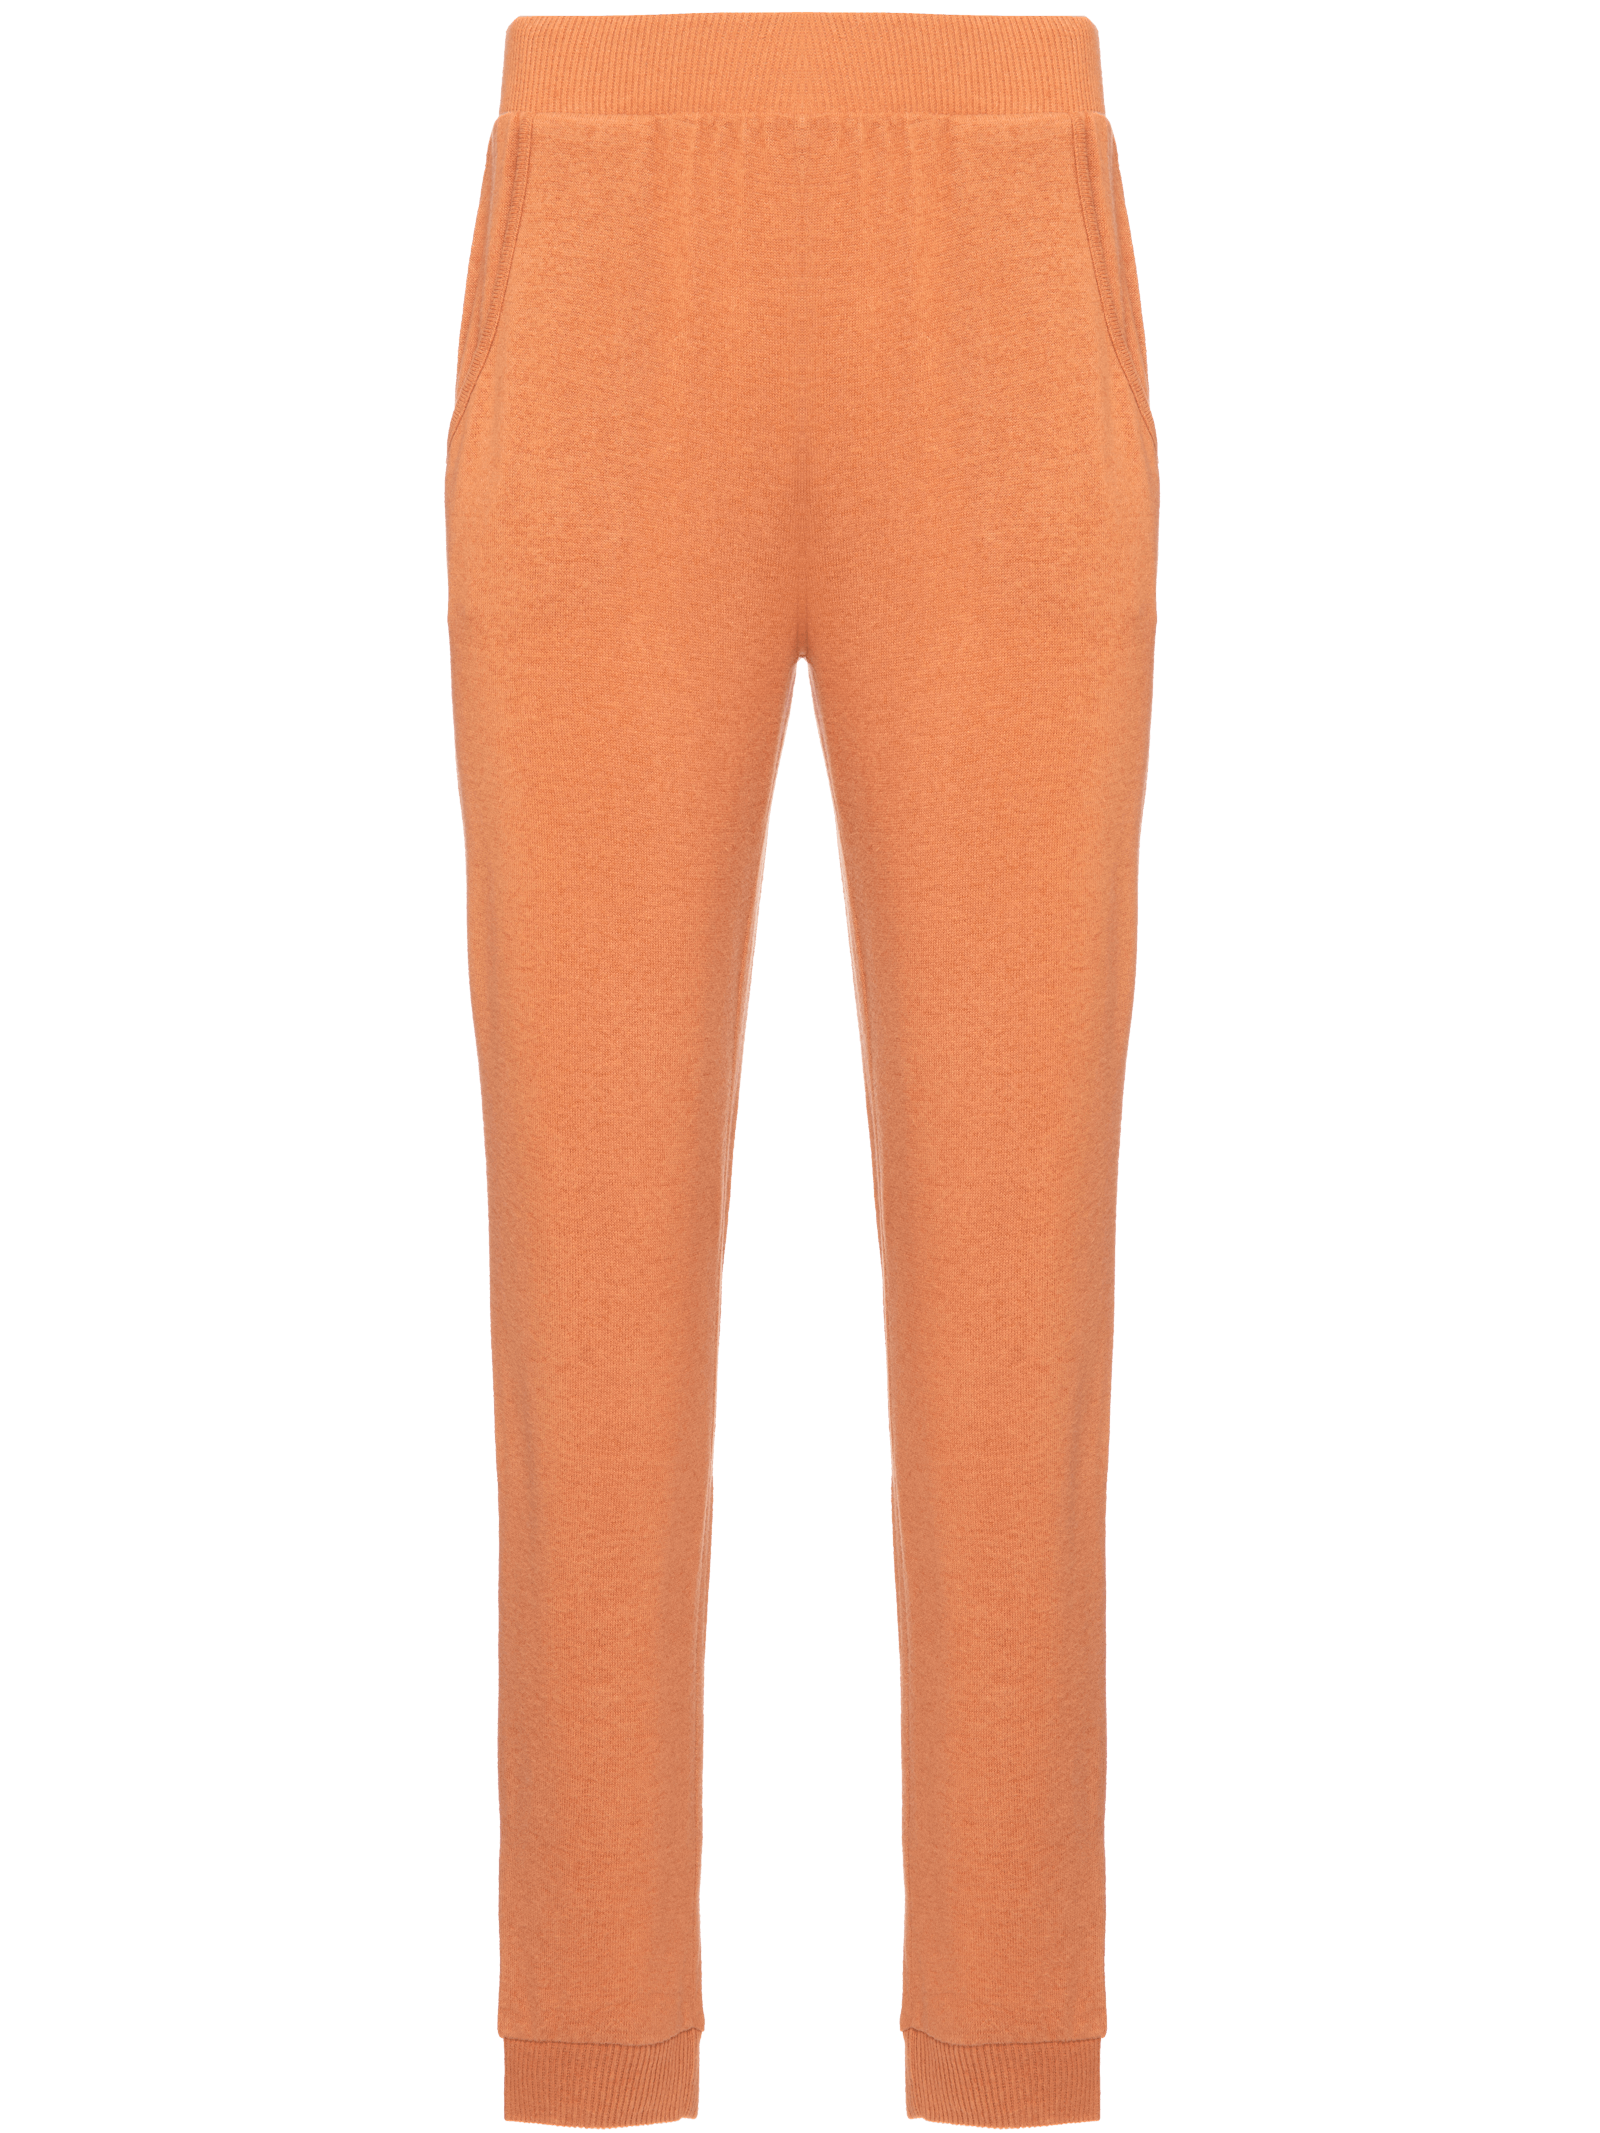 Calça Pantalona De Tricot Ampla Marrom - Animale Mobile